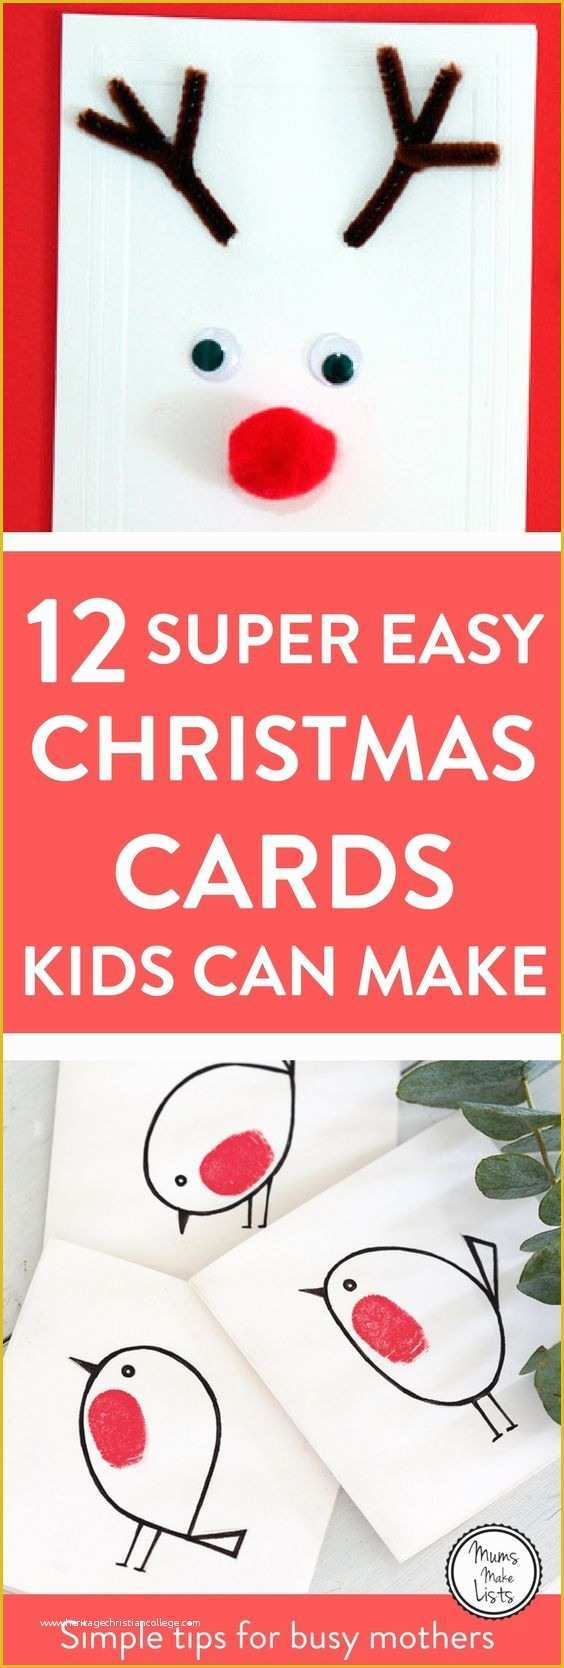 E Christmas Card Templates Free Of 25 Unique Christmas Card Templates Ideas On Pinterest